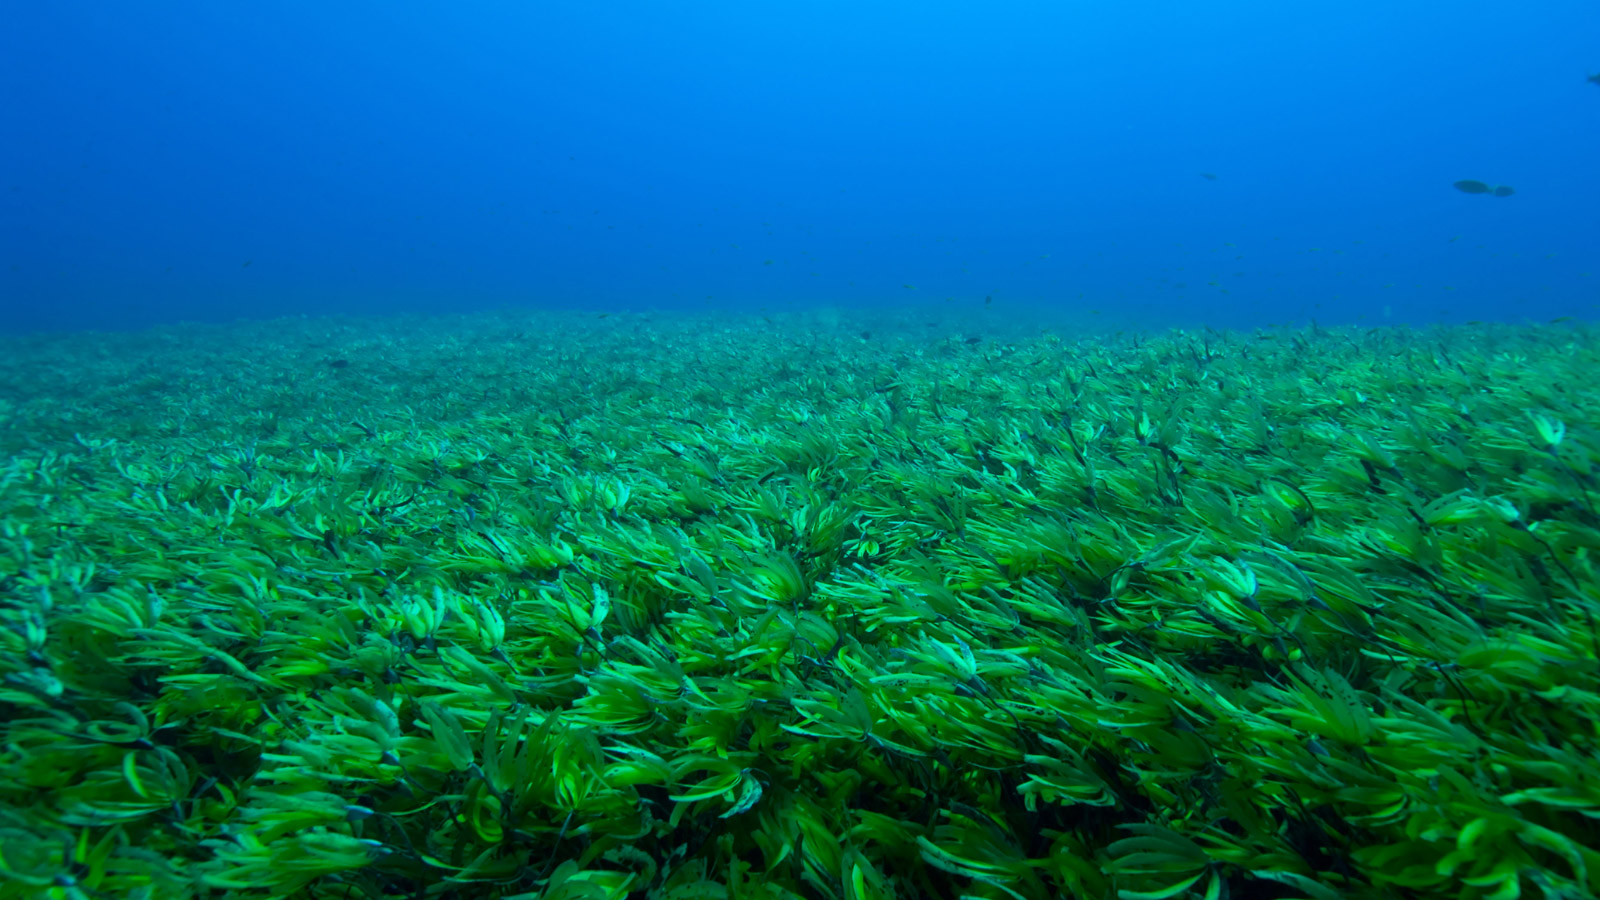 Seagrass on the ocean floor